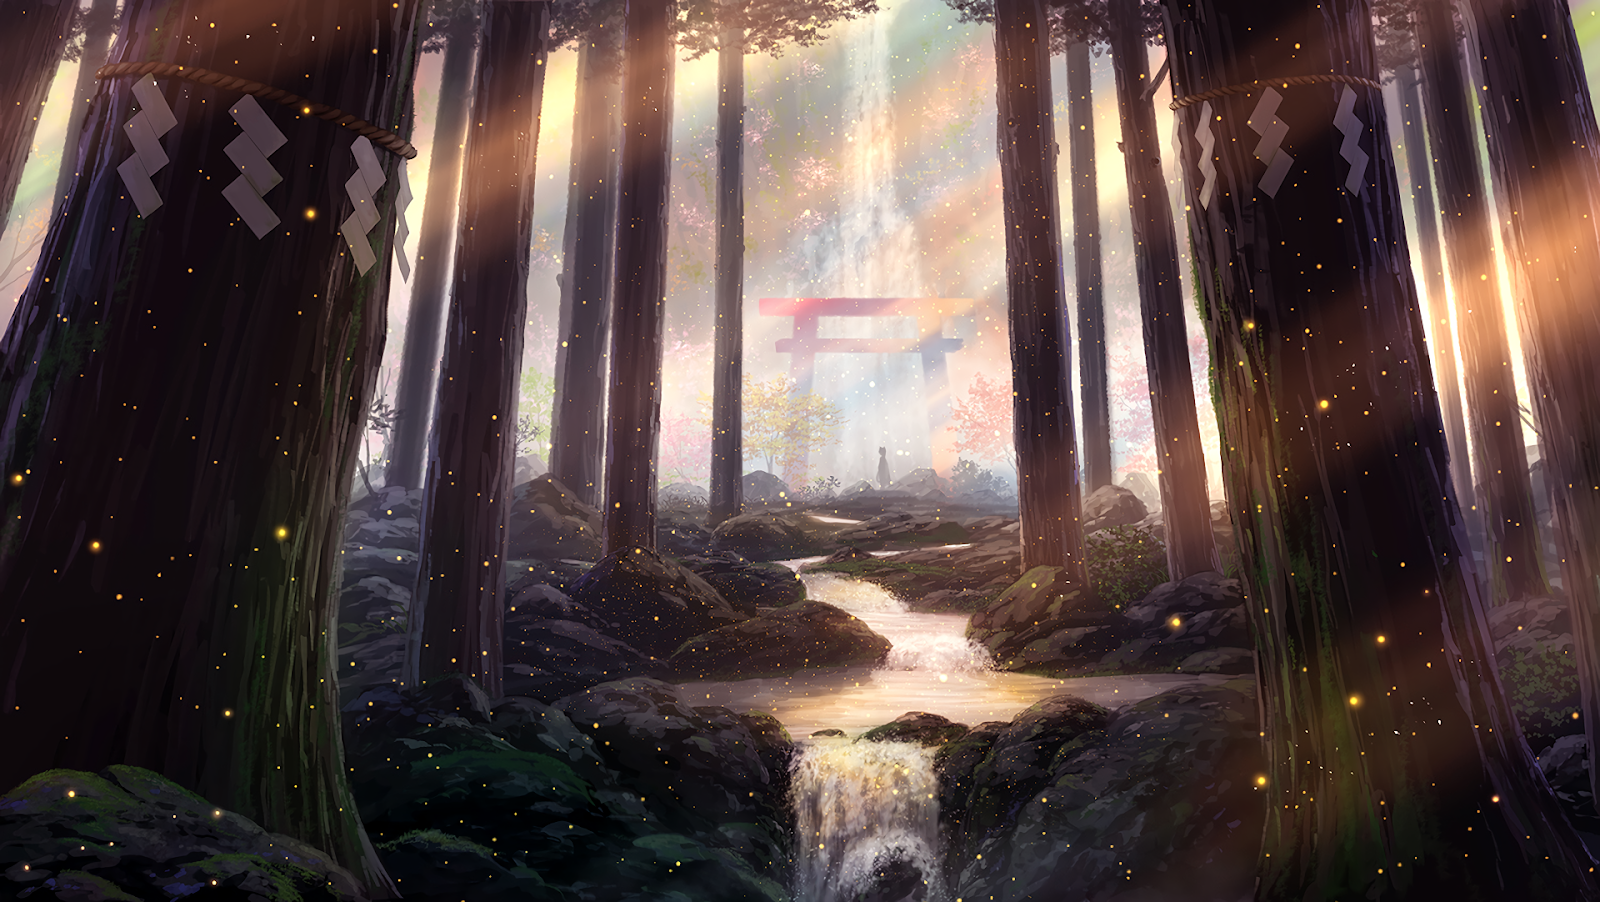 A Stunning Digital Art, Artwork, Forest, Trees, Landscape Full HD Desktop and Mobile Wallpaper Background (1920x1082)